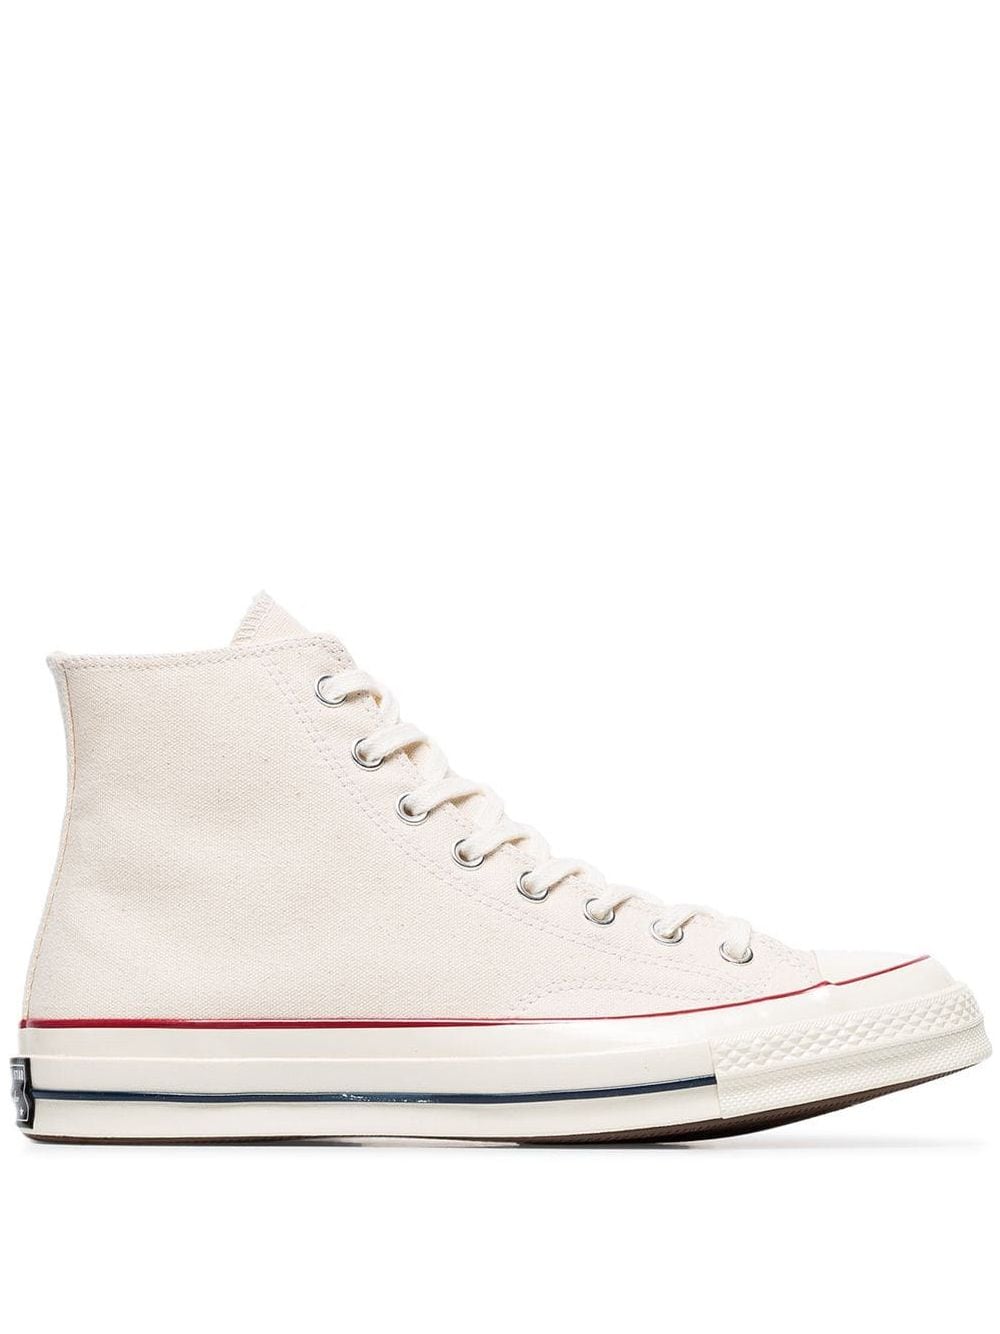 Converse Chuck 70 Hi "Parchment" sneakers - White von Converse